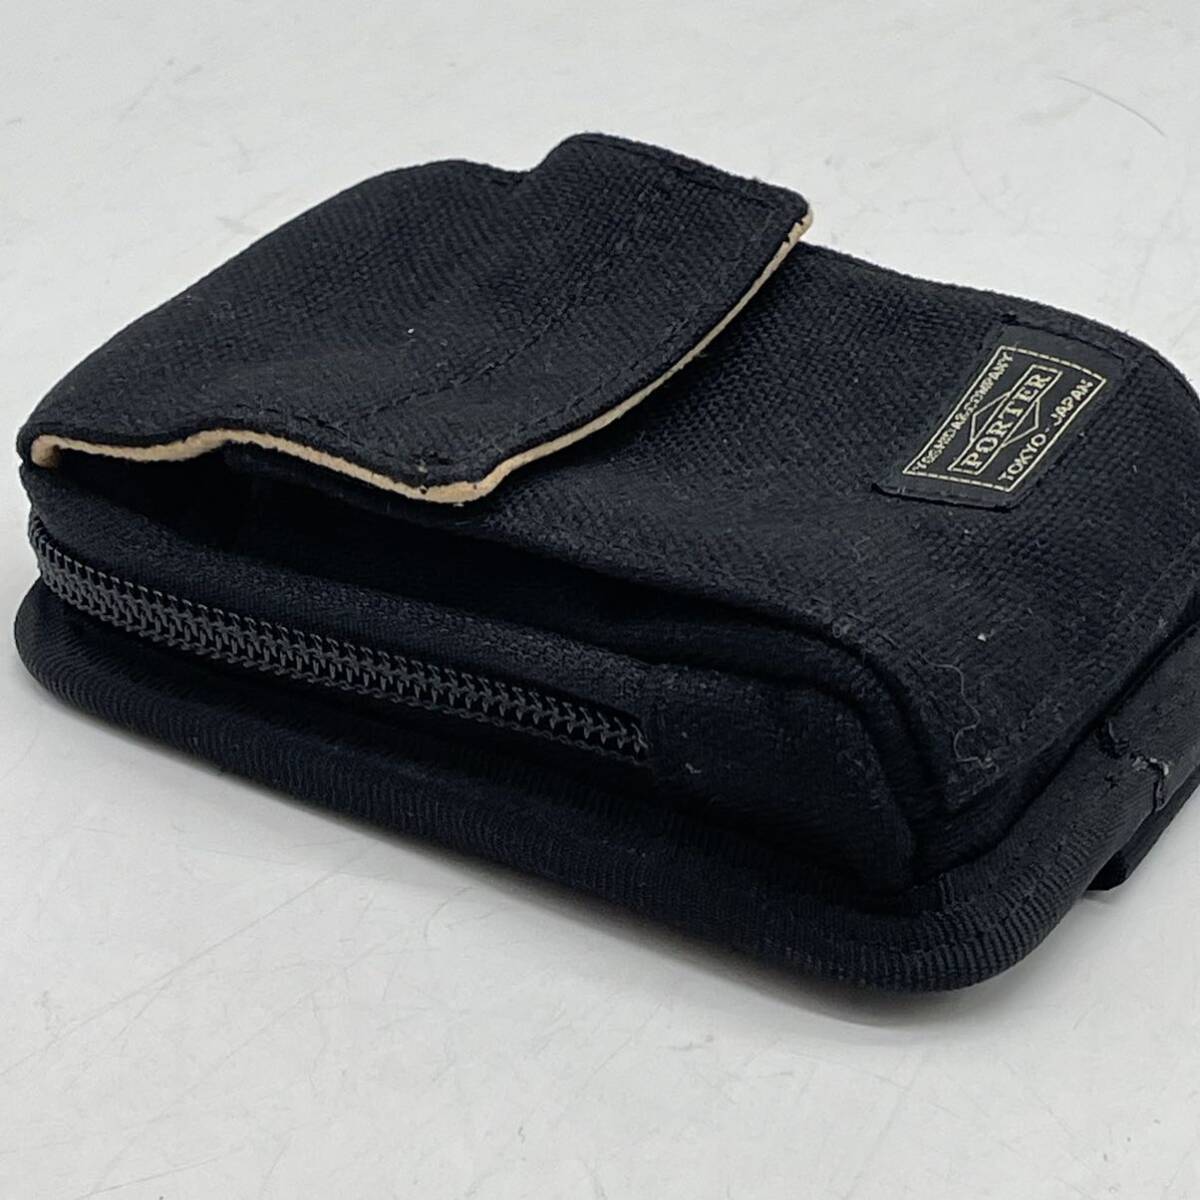 KO1861*POTER Porter mobile case multi pouch belt pouch inside side nappy material black digital camera electron cigarettes 